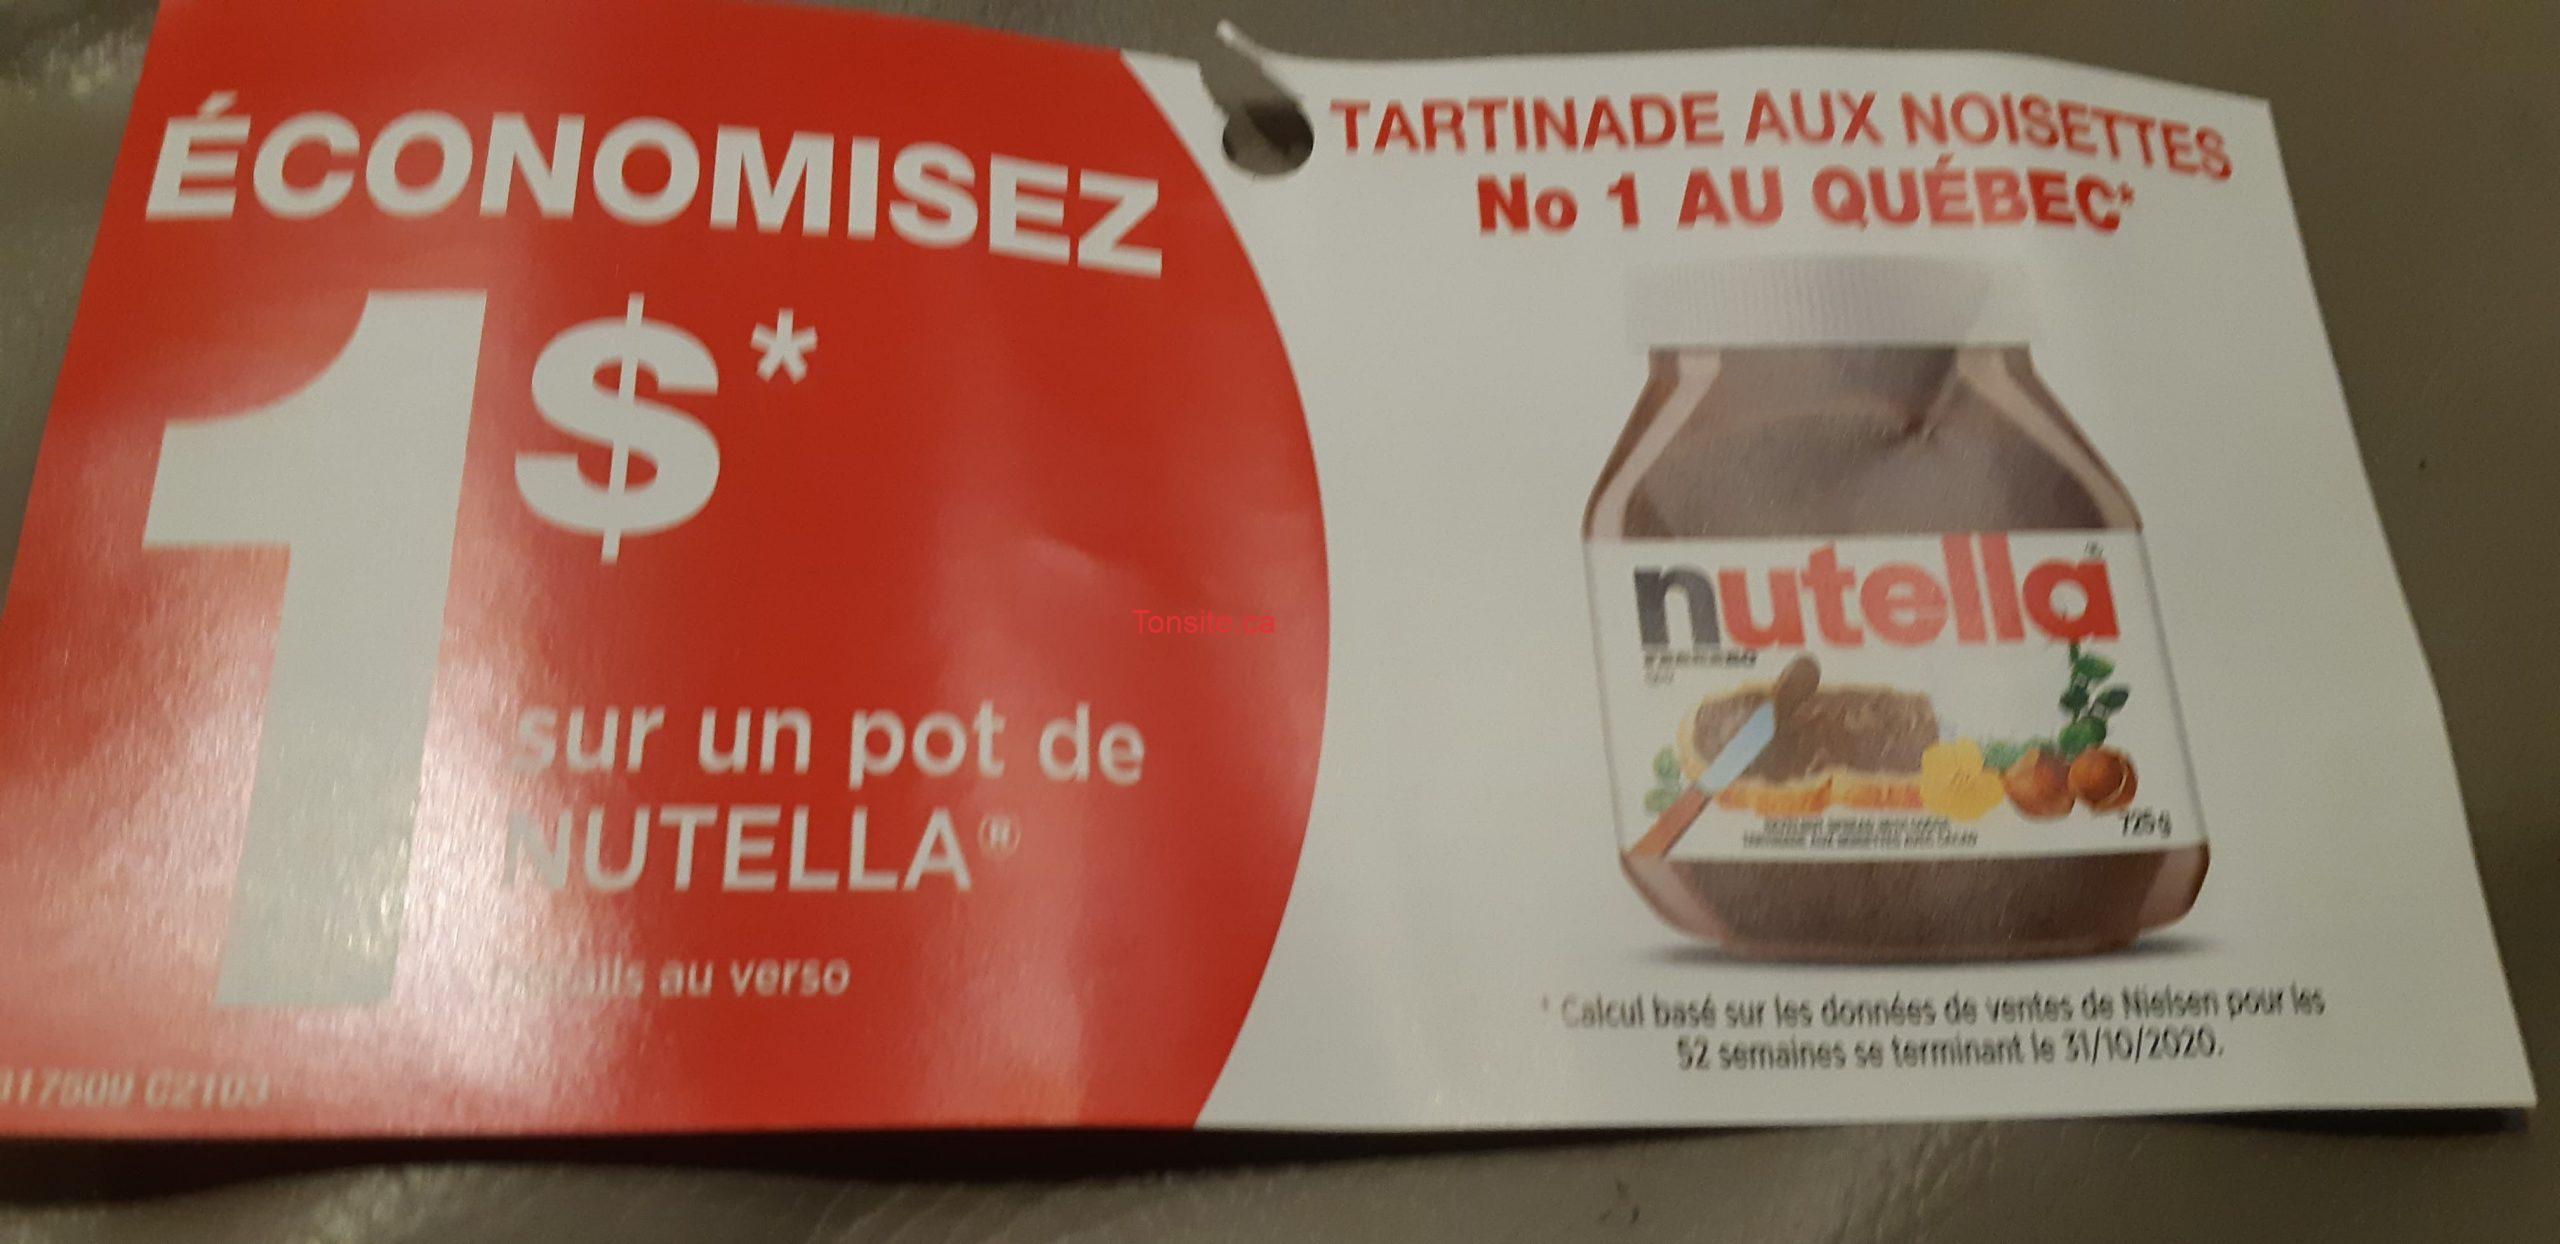 nutella-coupon1-scaled Tartinade aux noisettes Nutella à 1$ seulement!